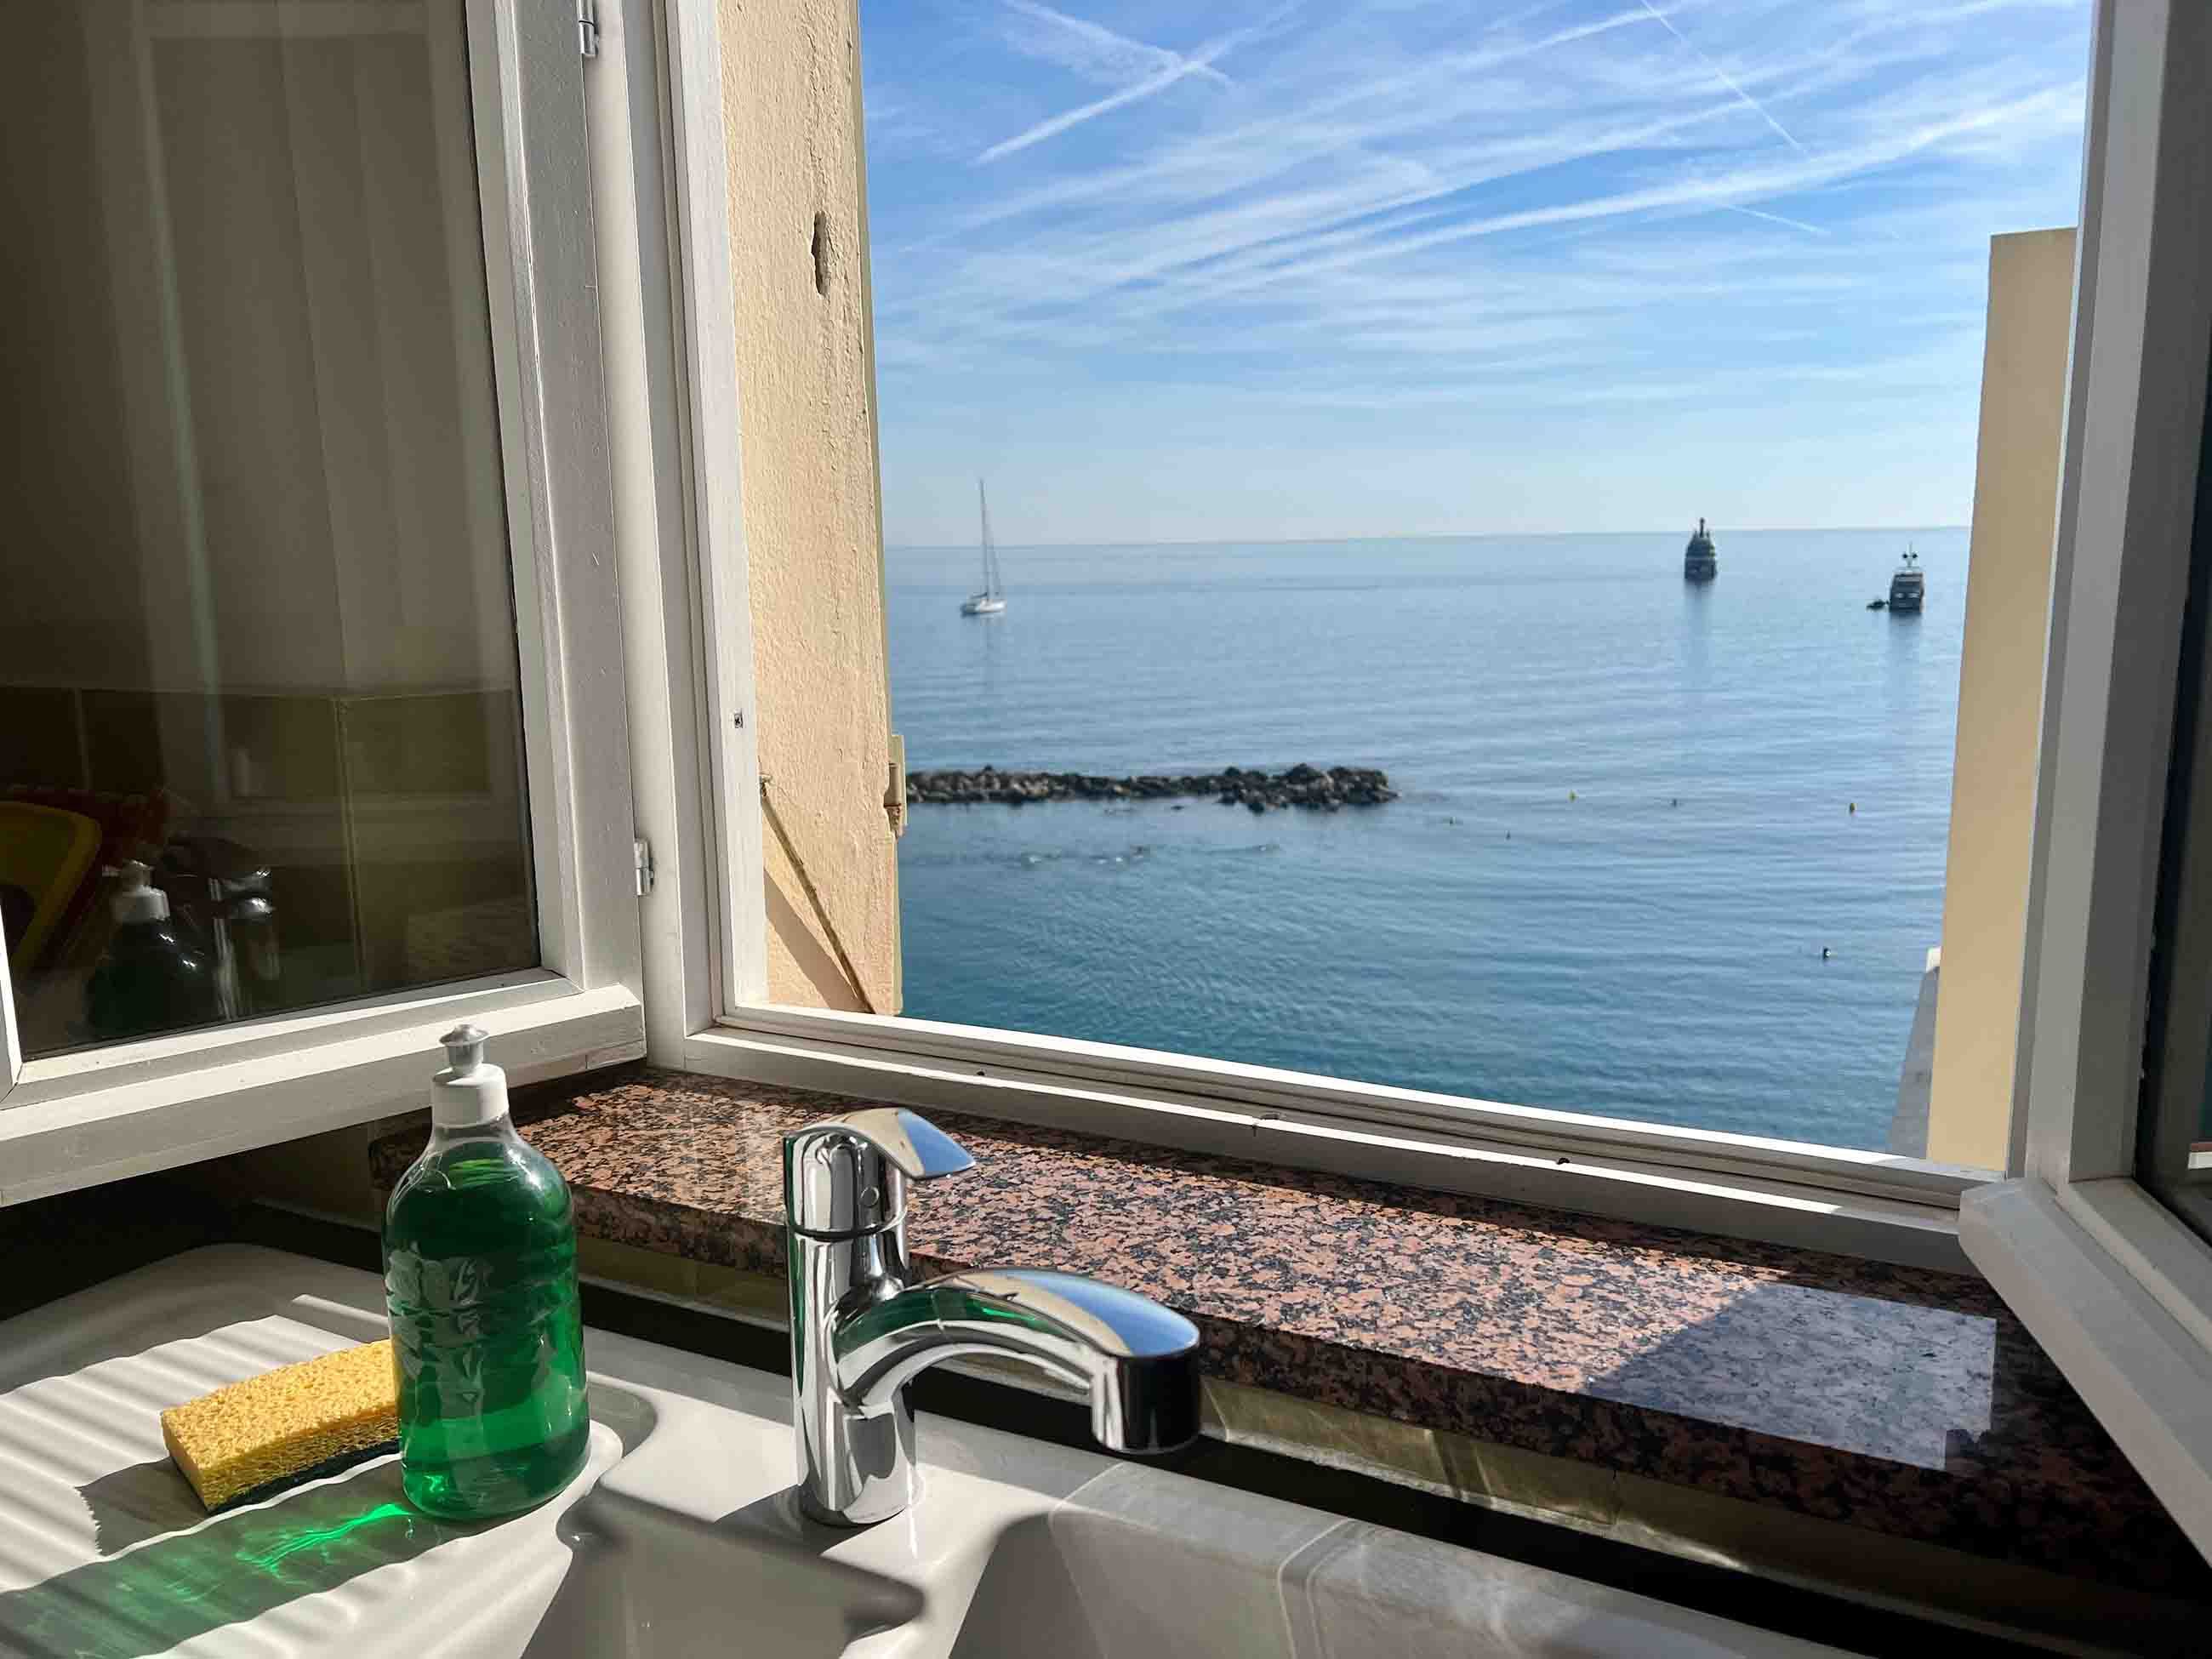 place de rêves Antibes kitchen window view of the Mediterranean Sea